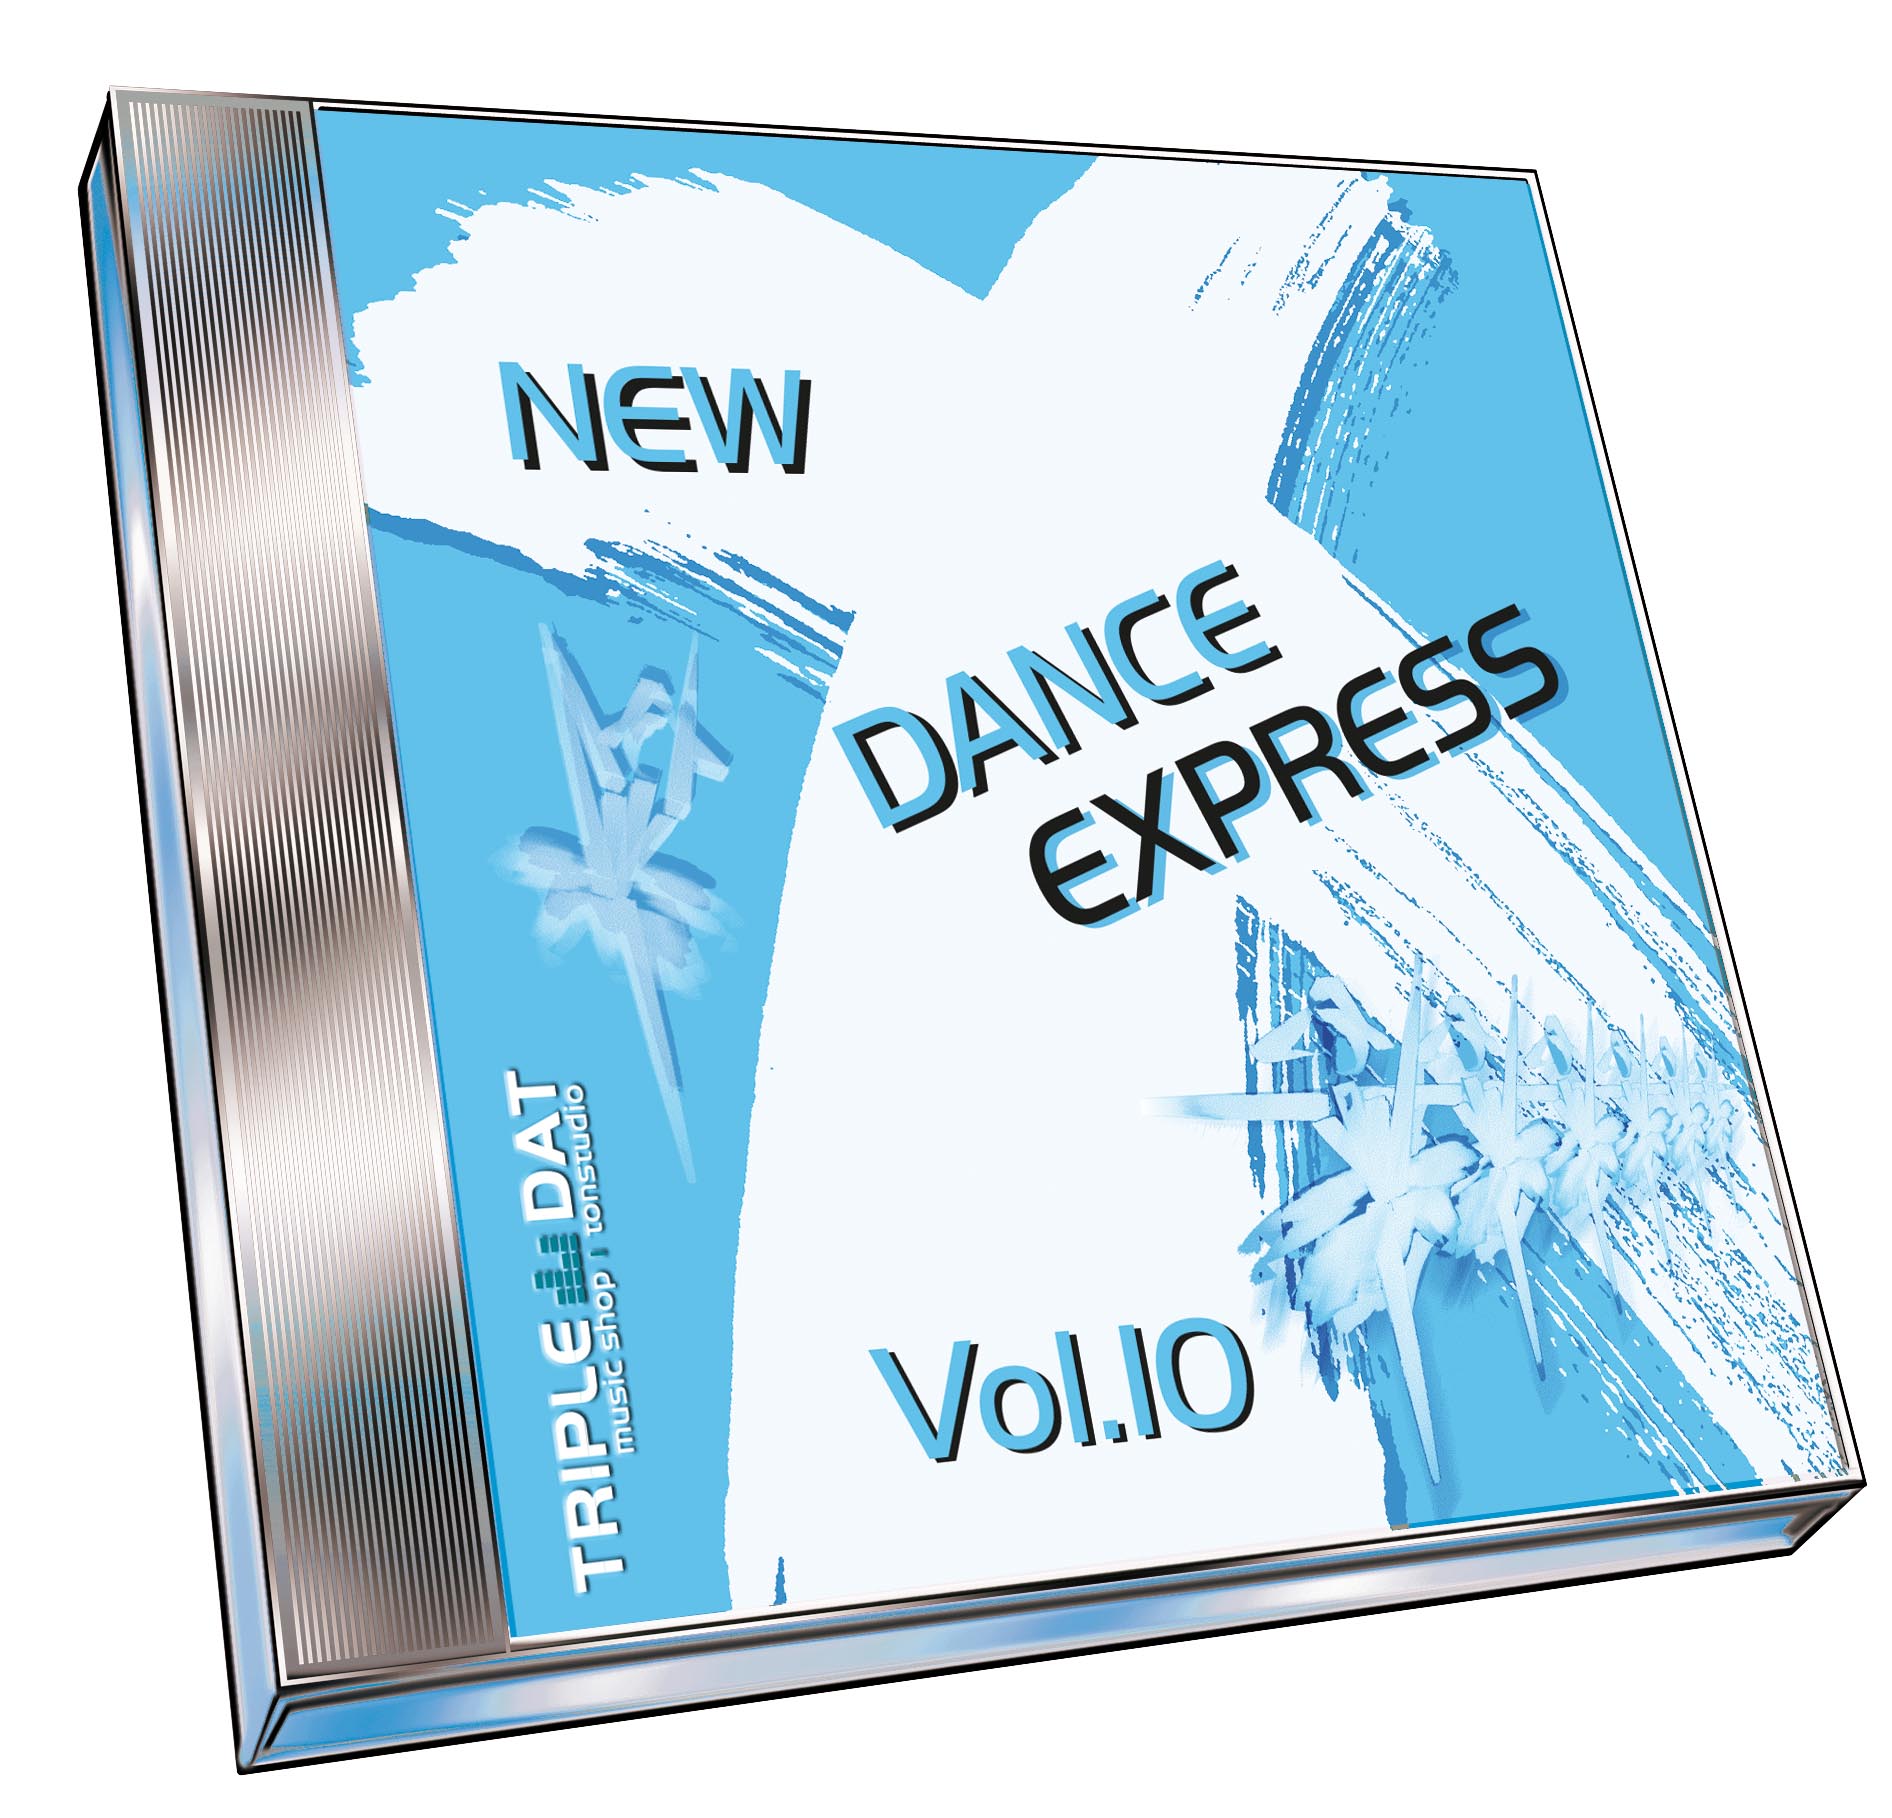 NEW Dance X-Press Vol. 10 - CD - Vorbestellung